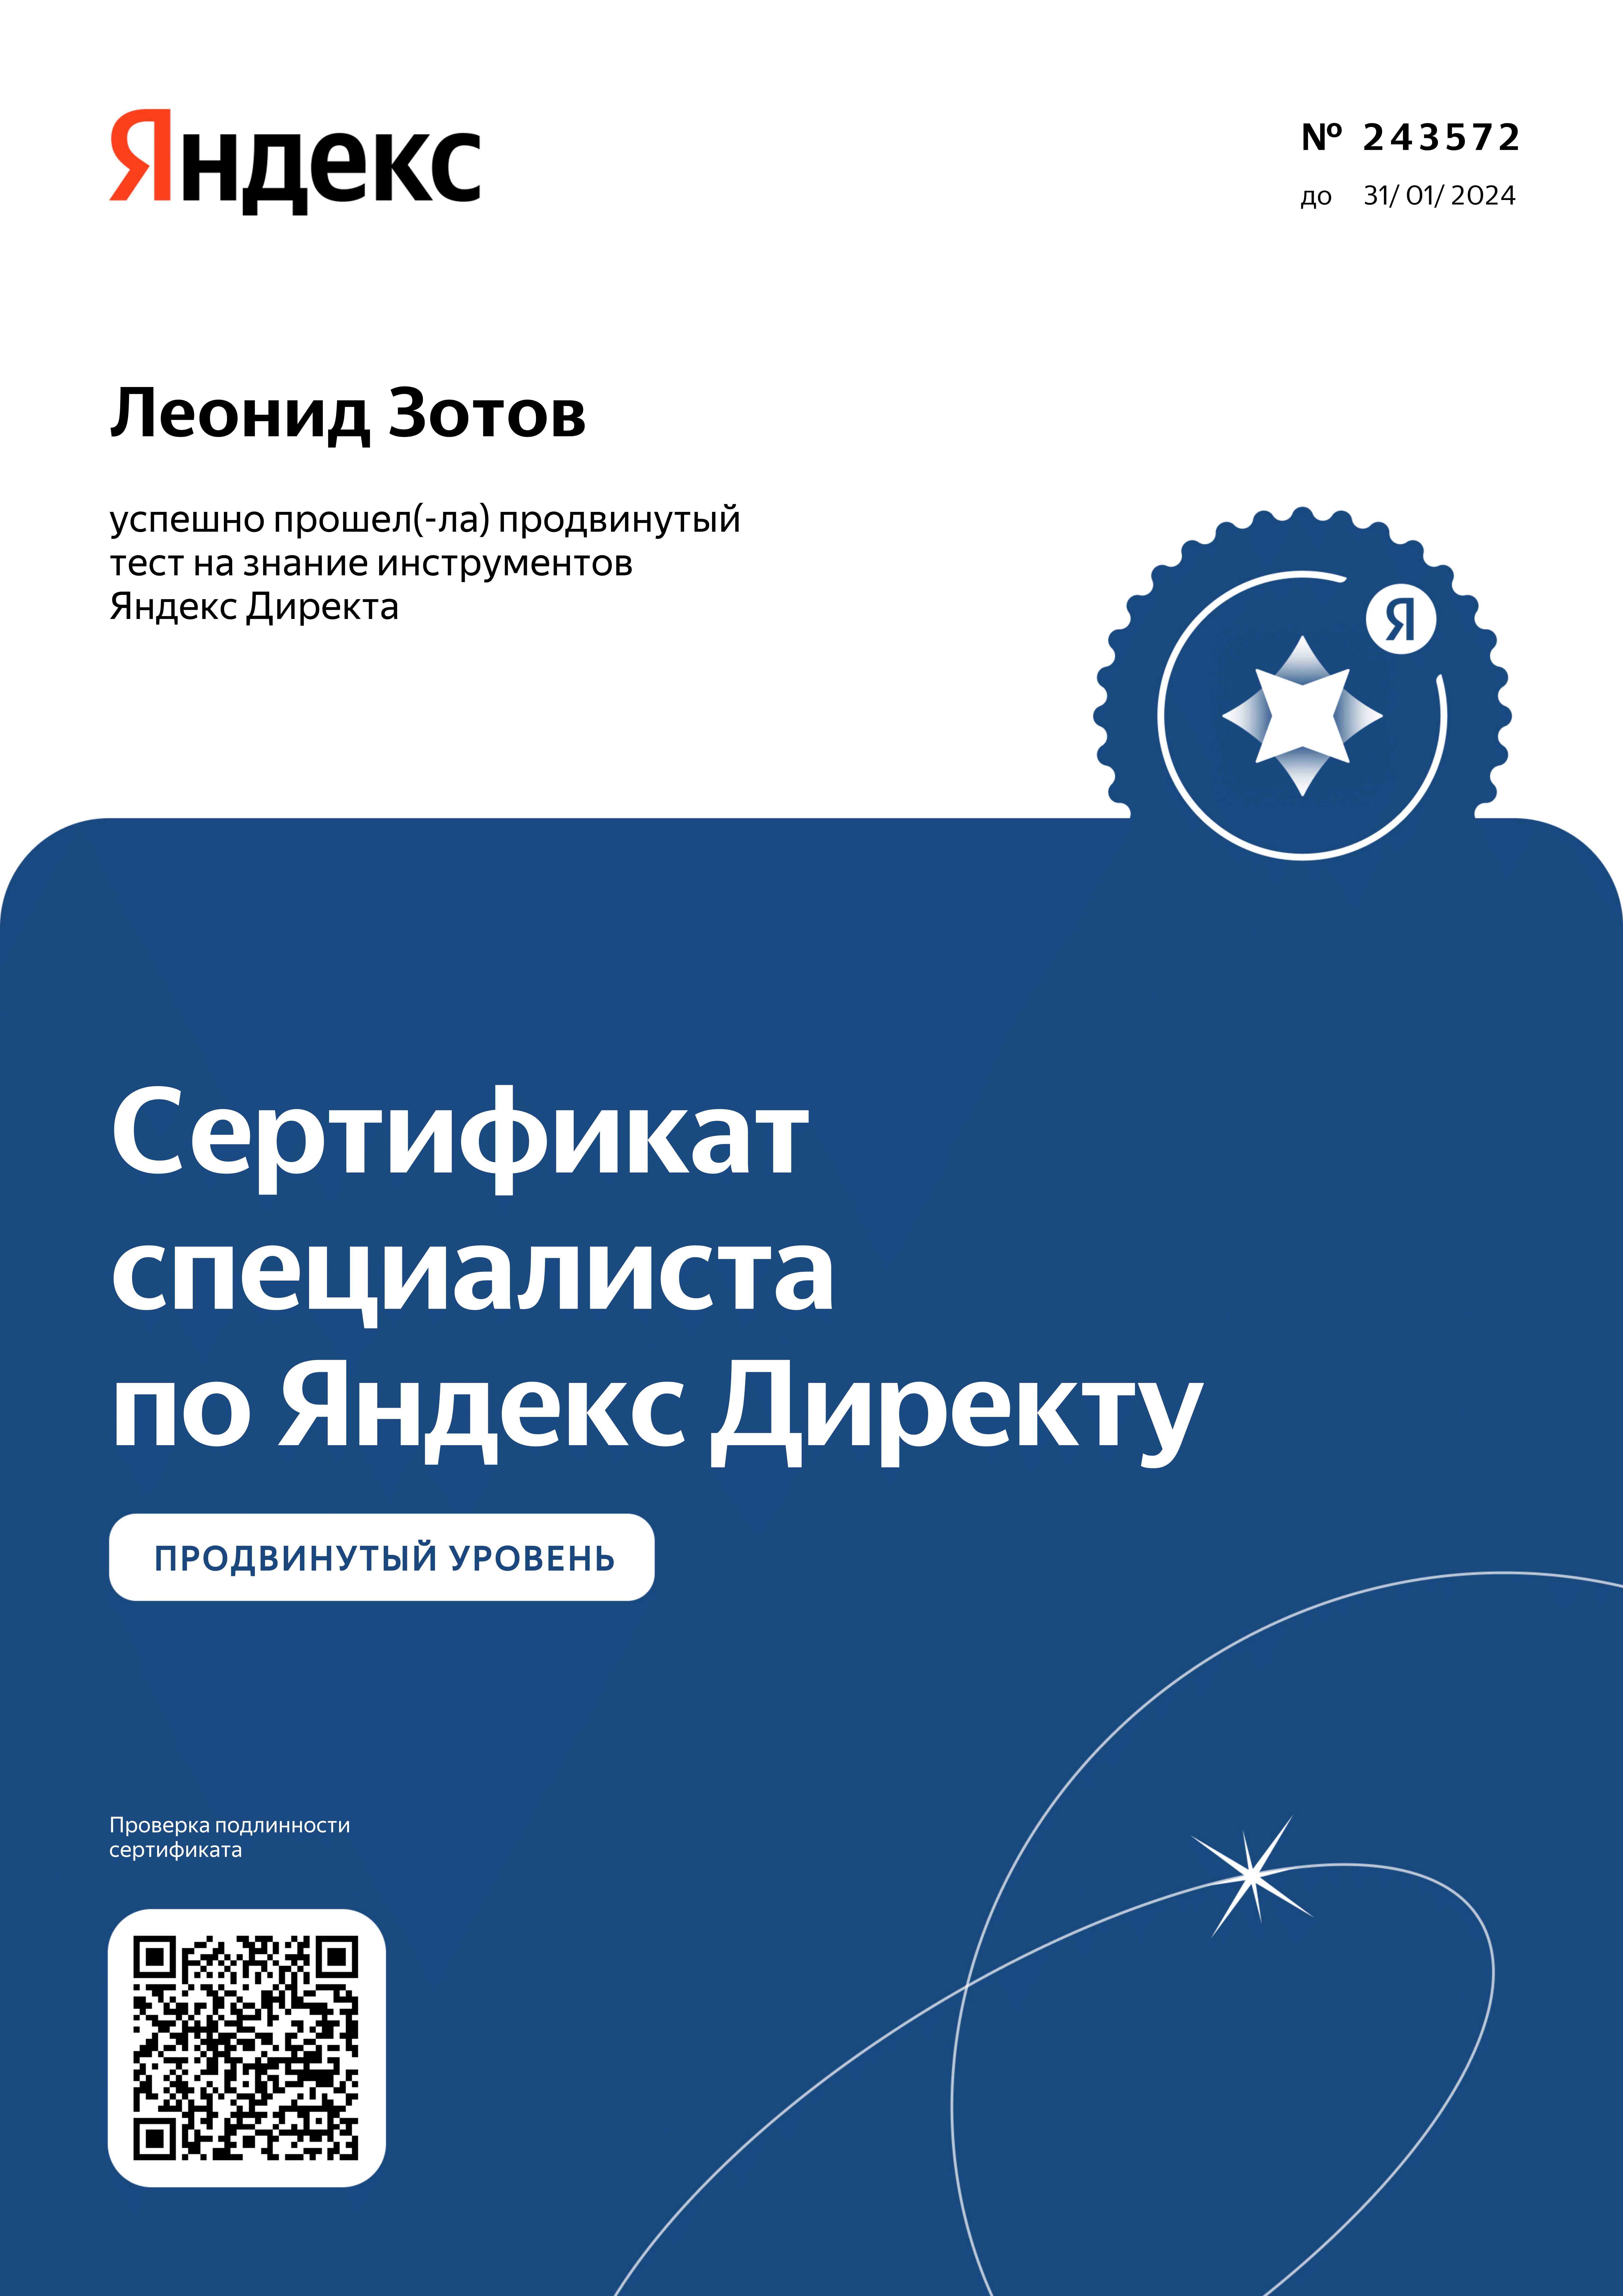 Зотов - Яндекс.Директ - Прокторинг 2023